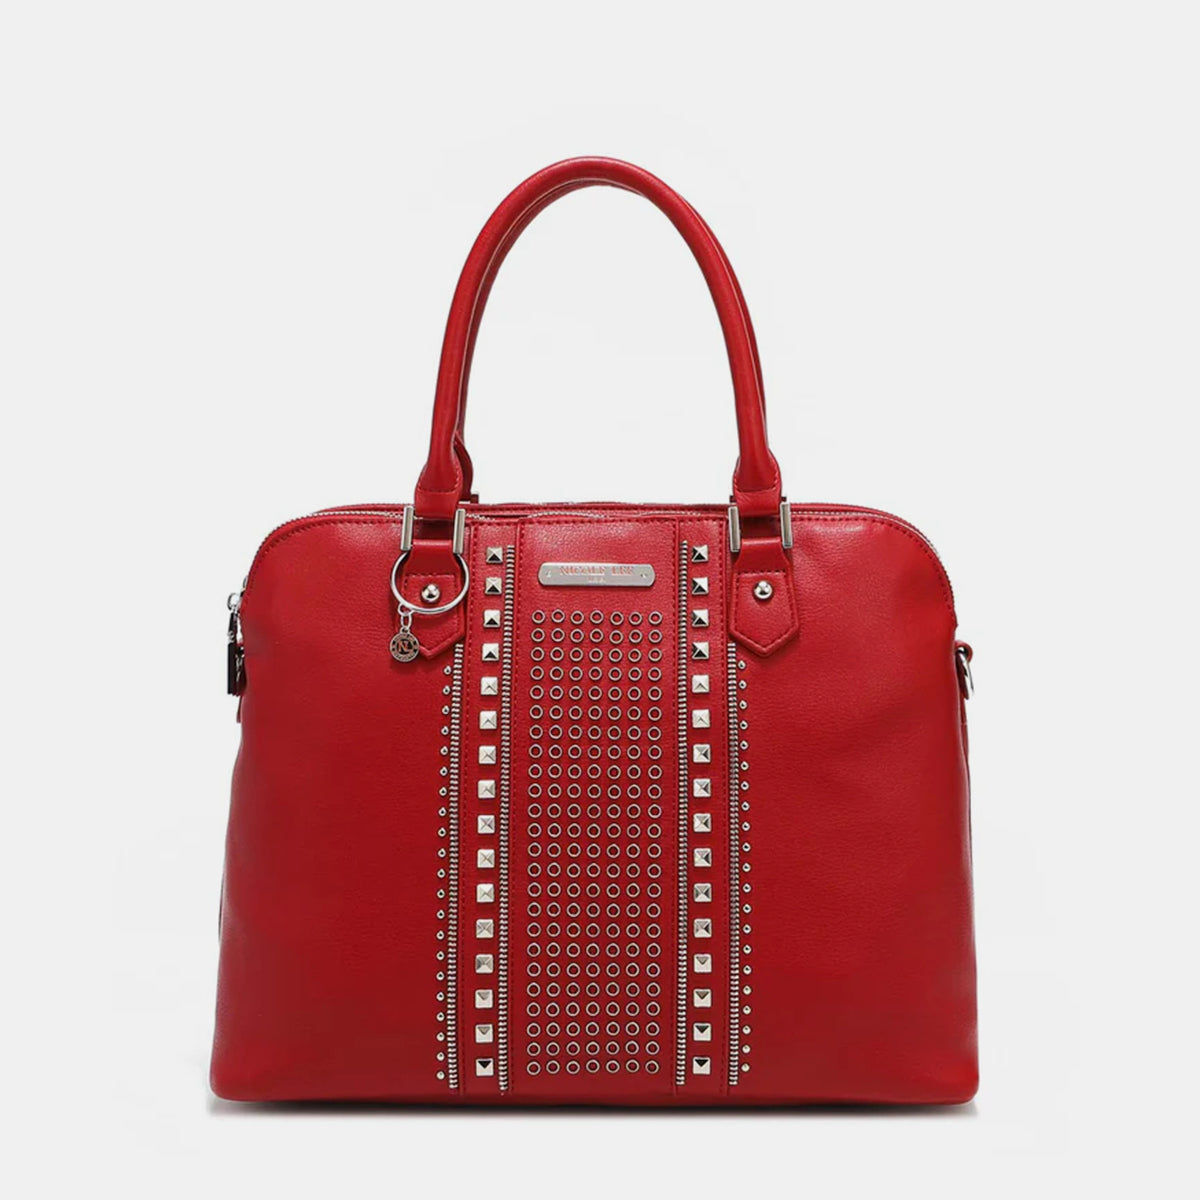 TEEK - NL Studded Decor Handbag BAG TEEK Trend Red  